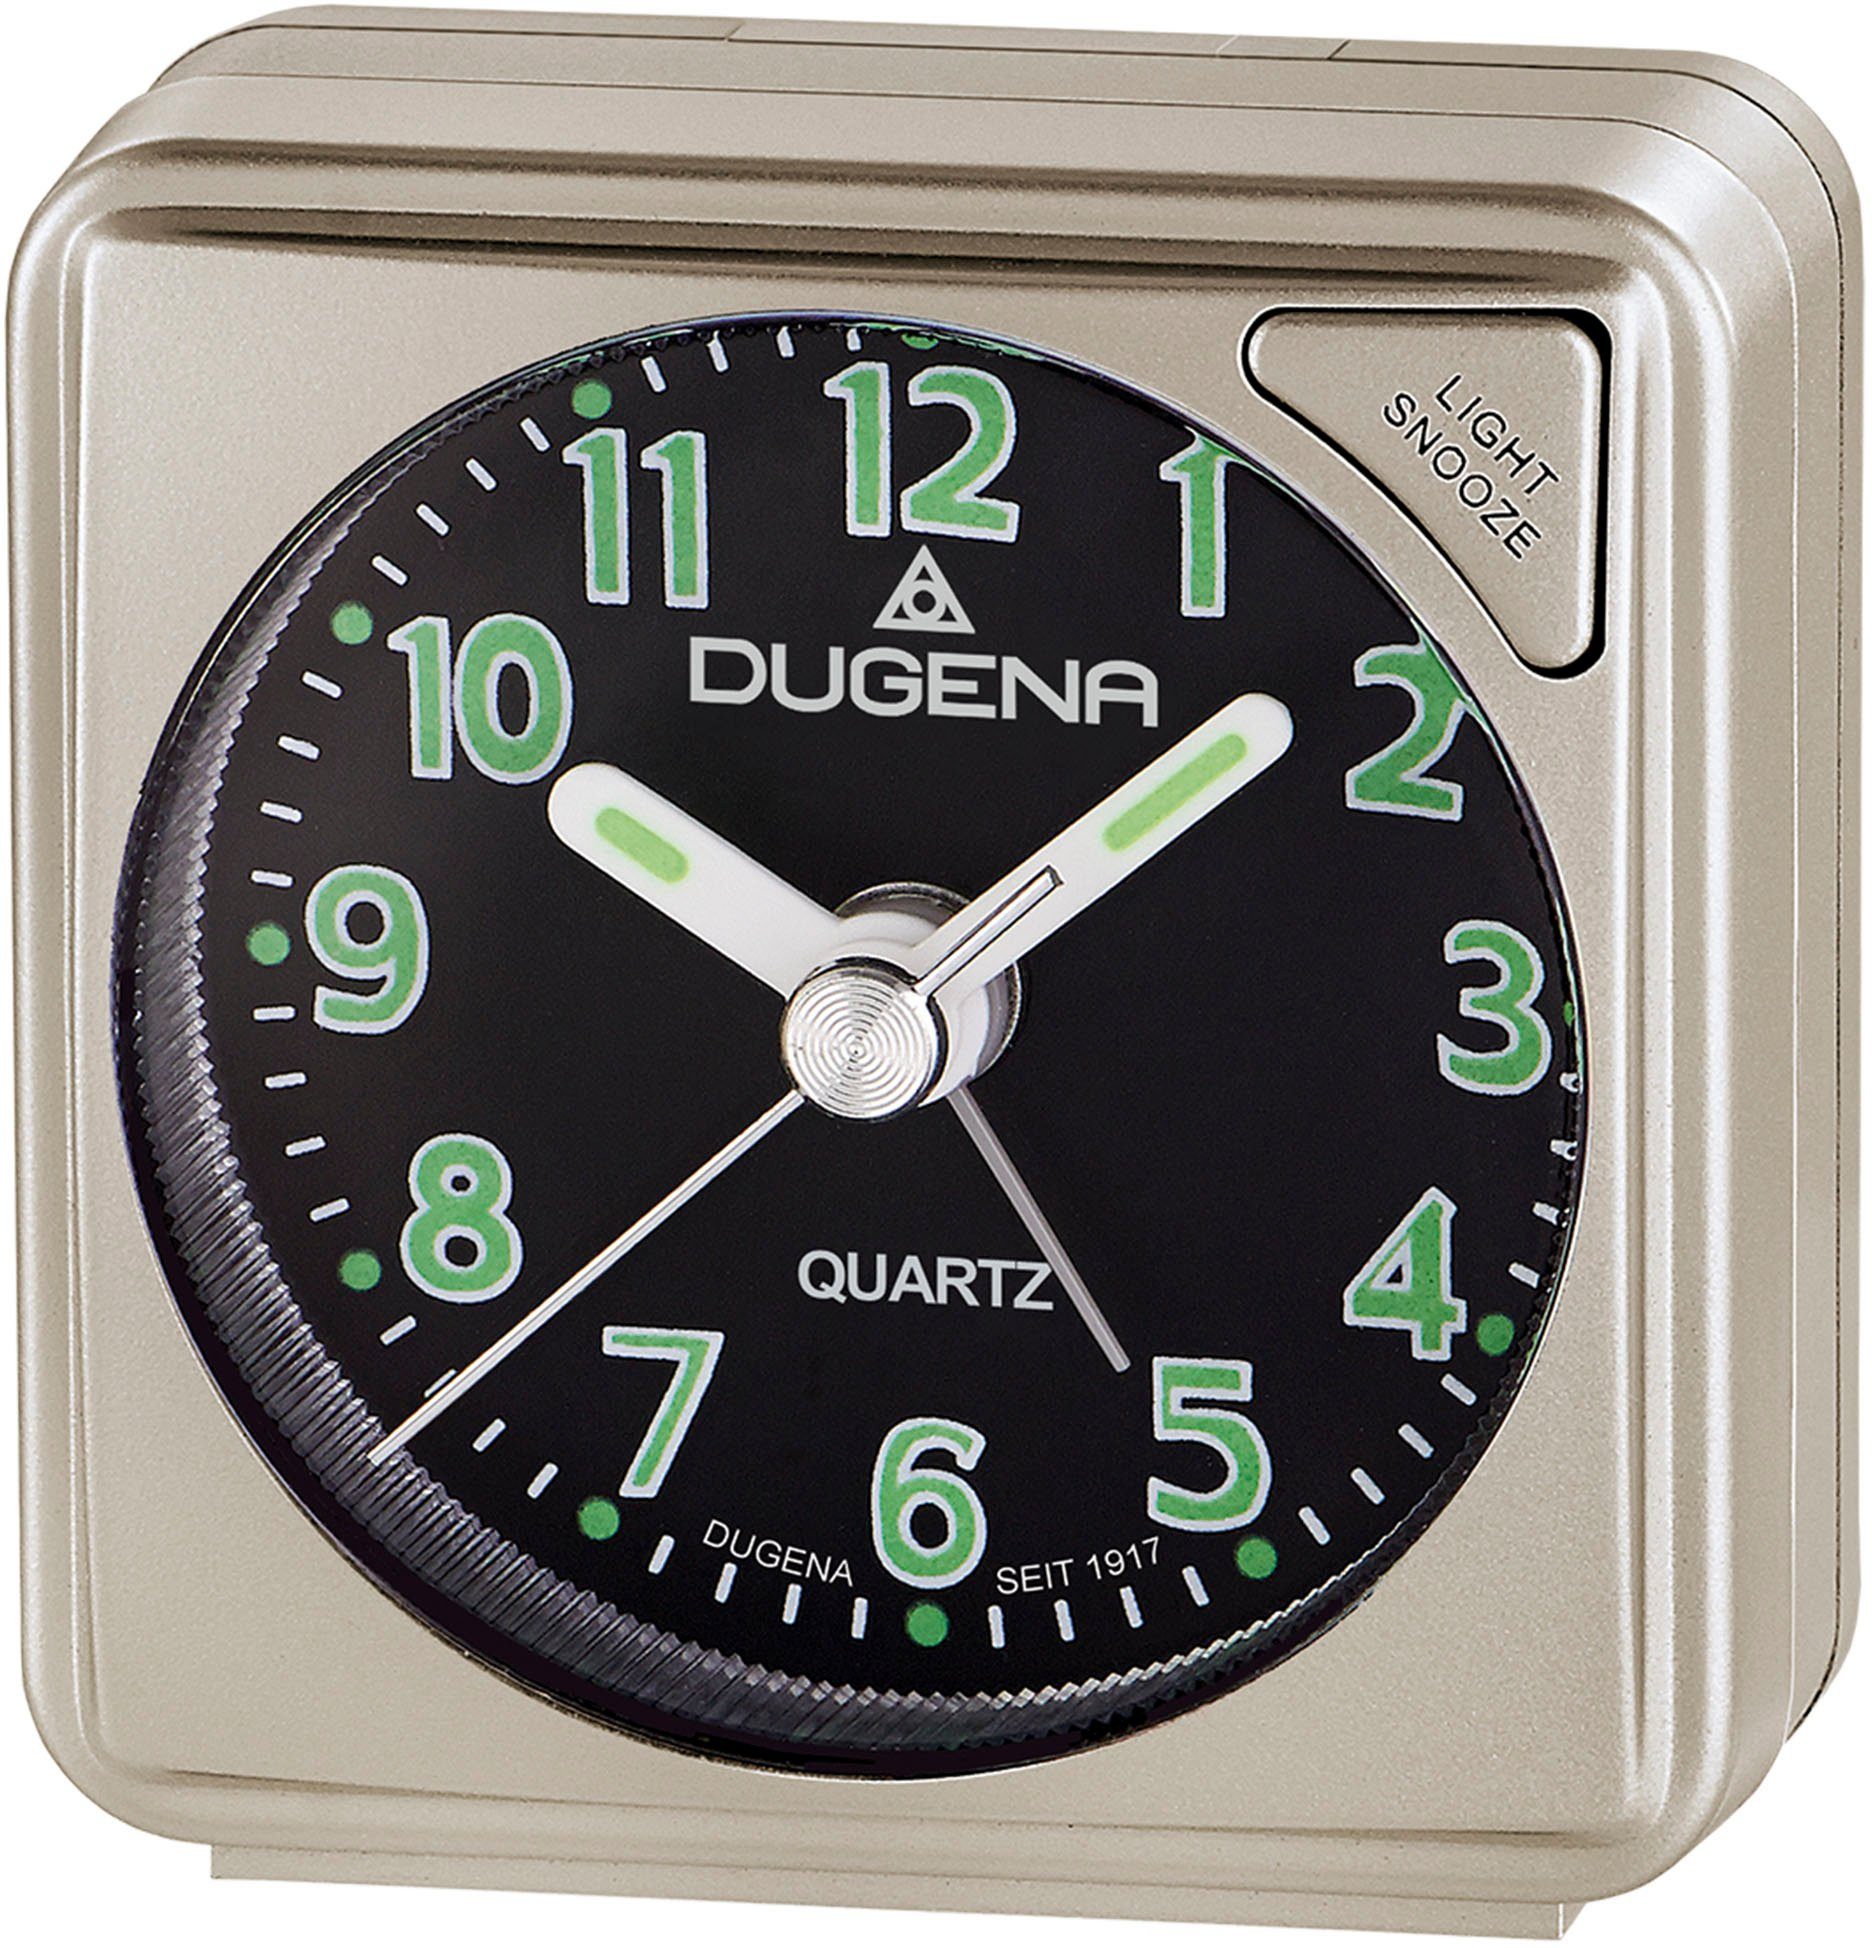 Dugena 4460614 Quarzwecker